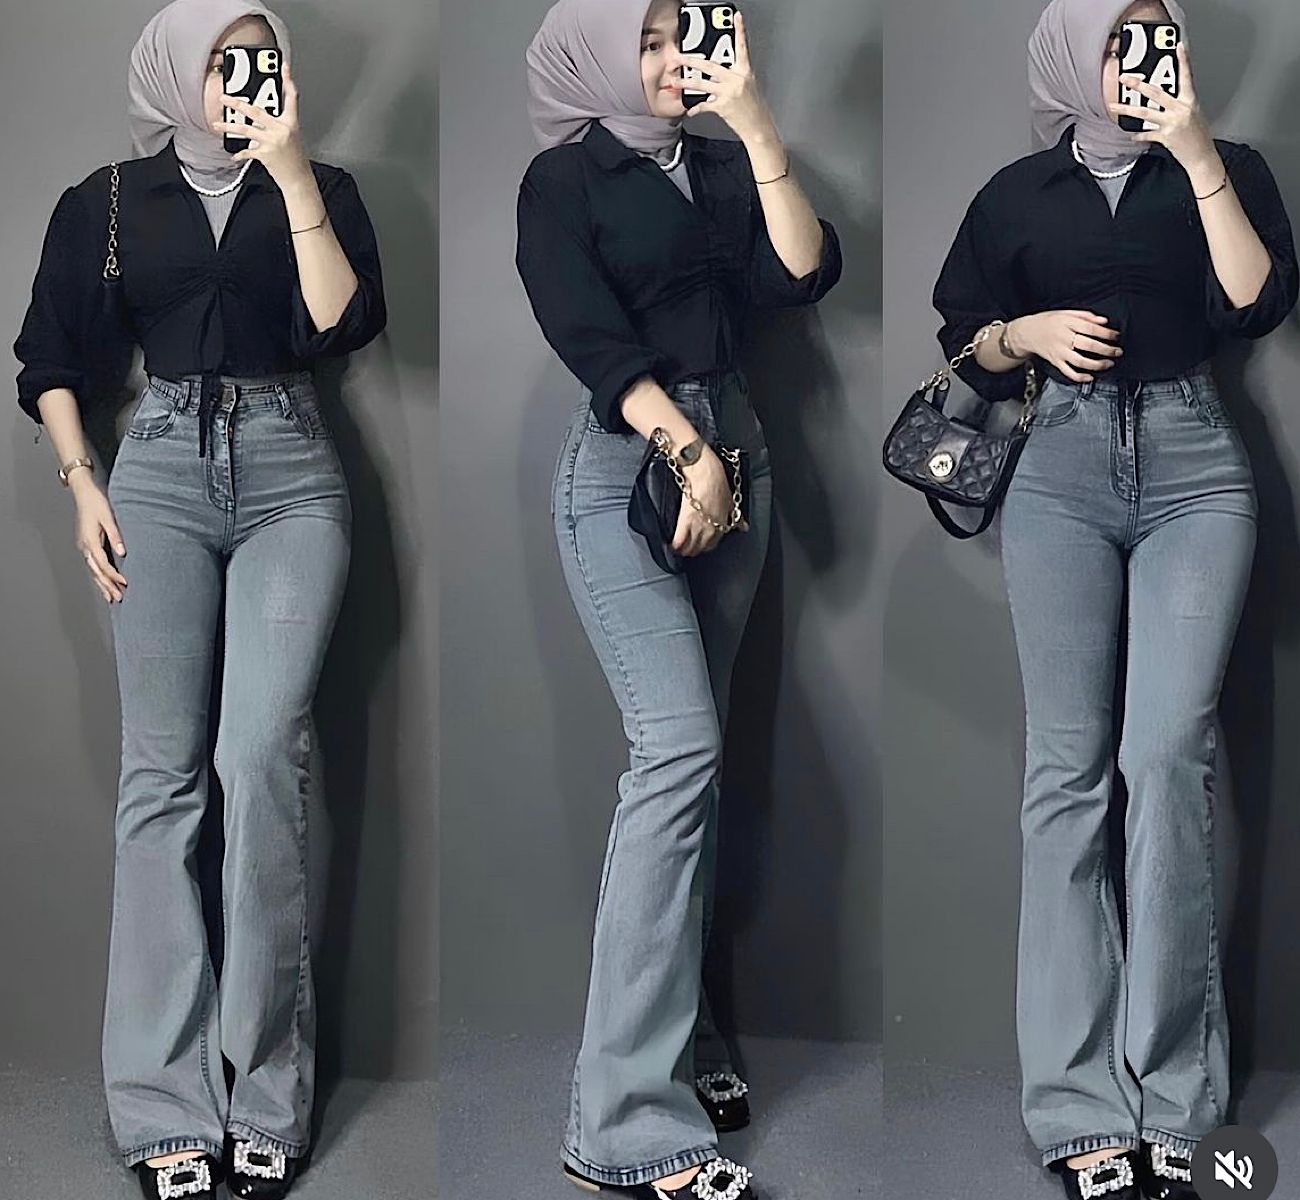 Rahasia Kaki Jenjang dengan Celana Cutbray: Ide Outfit stylish